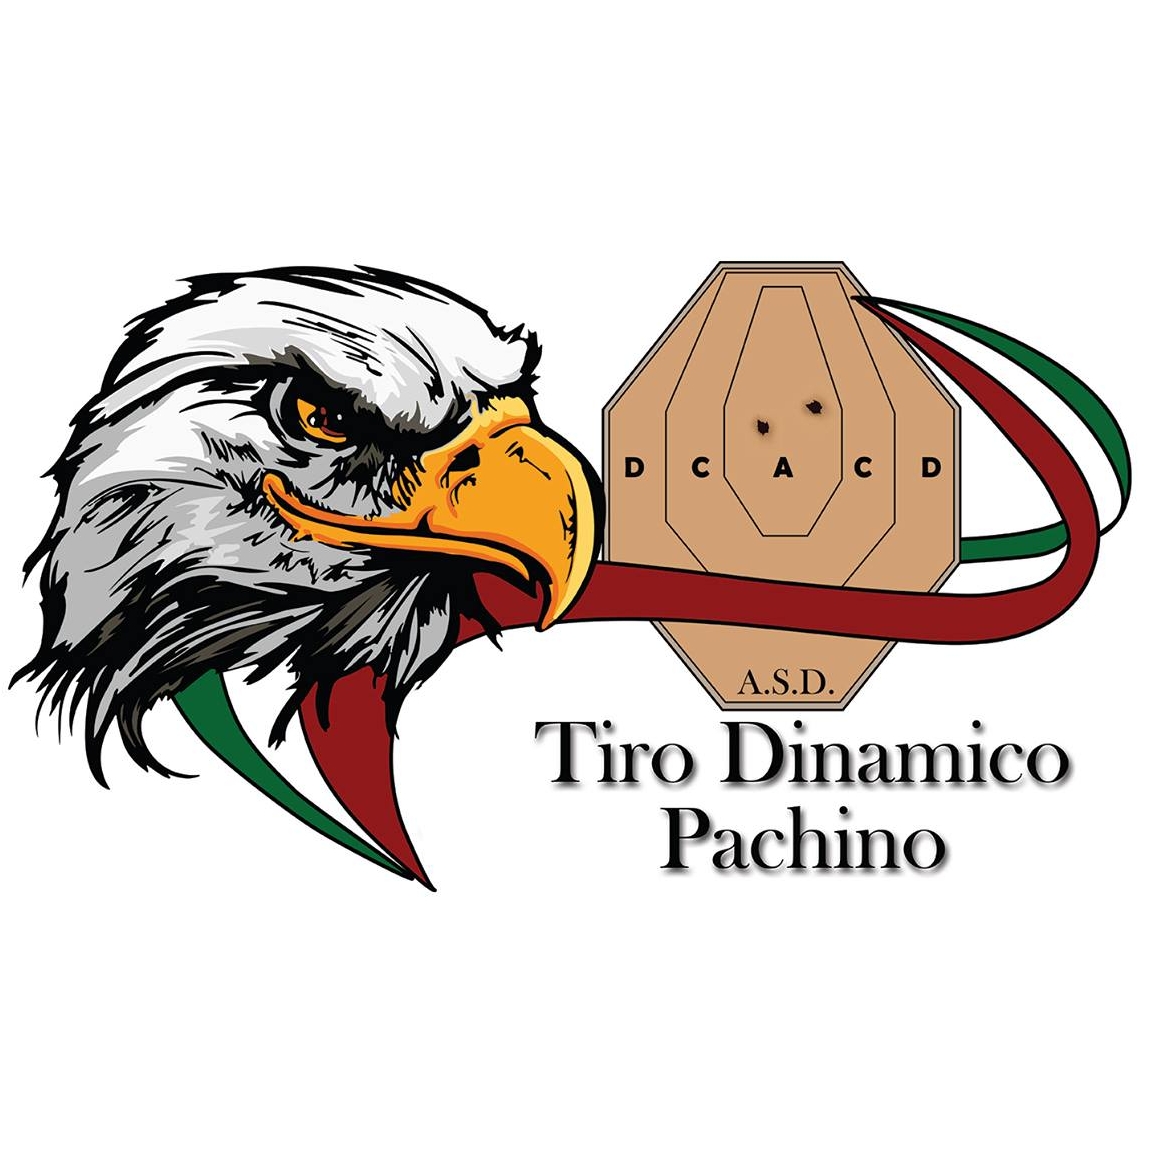 A.S.D. TIRO DINAMICO PACHINO